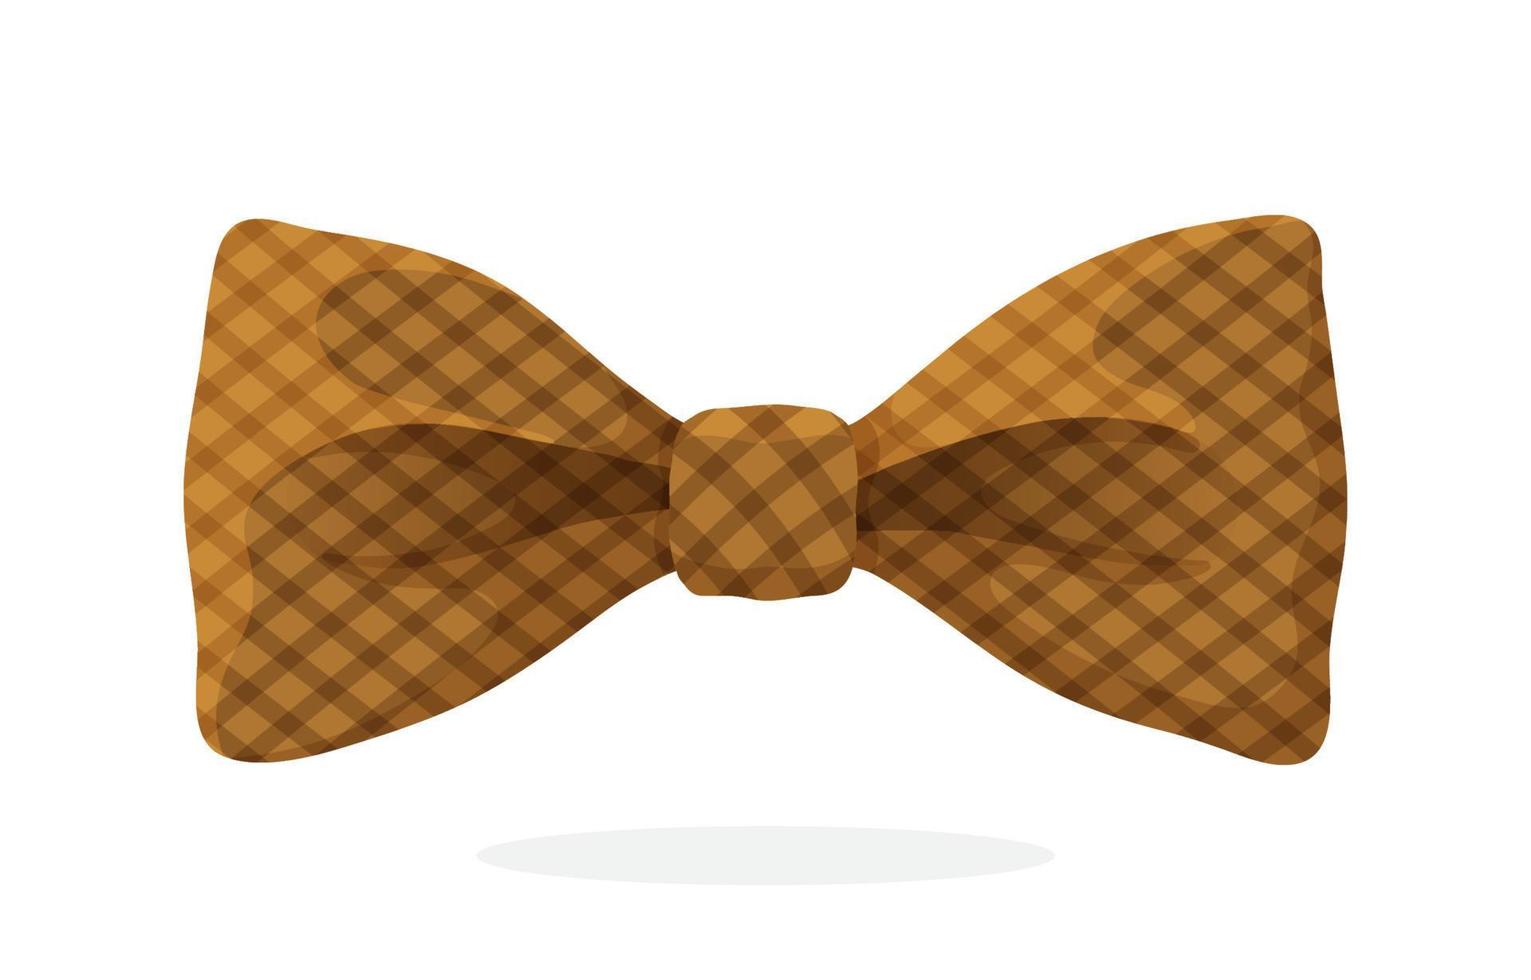 Checkered retro bow tie brown color. Vector illustration in cartoon style. Vintage elegant bowtie. Men's clothing accessories